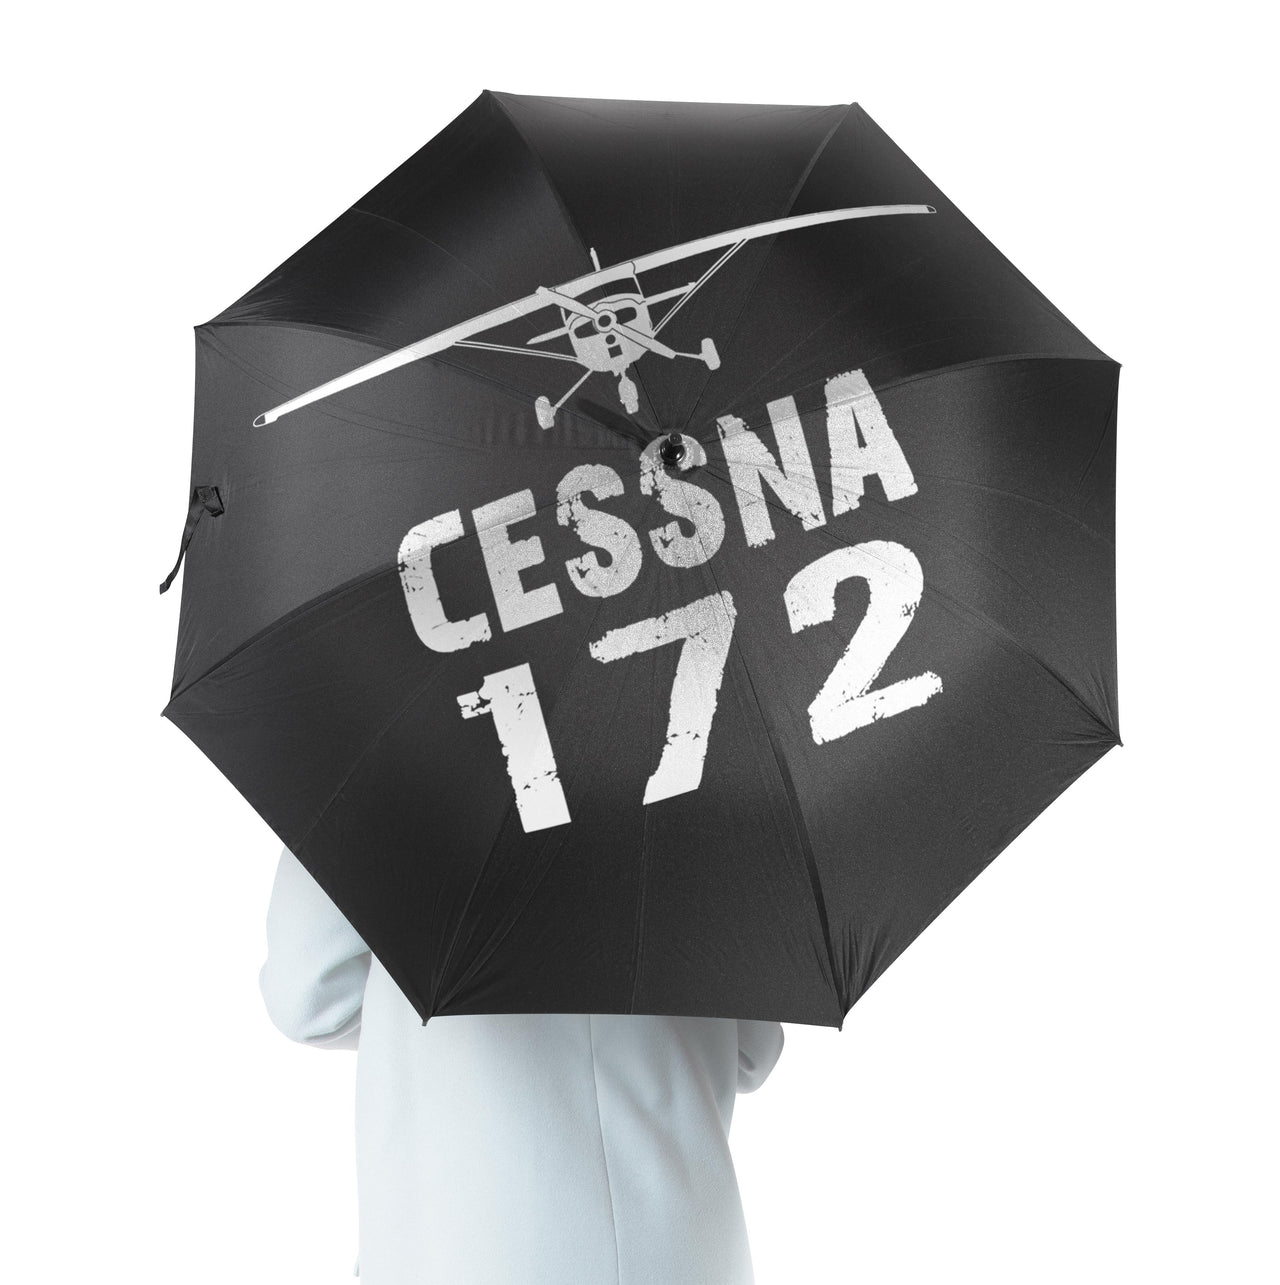 Cessna 172 & Plane Designed Umbrella